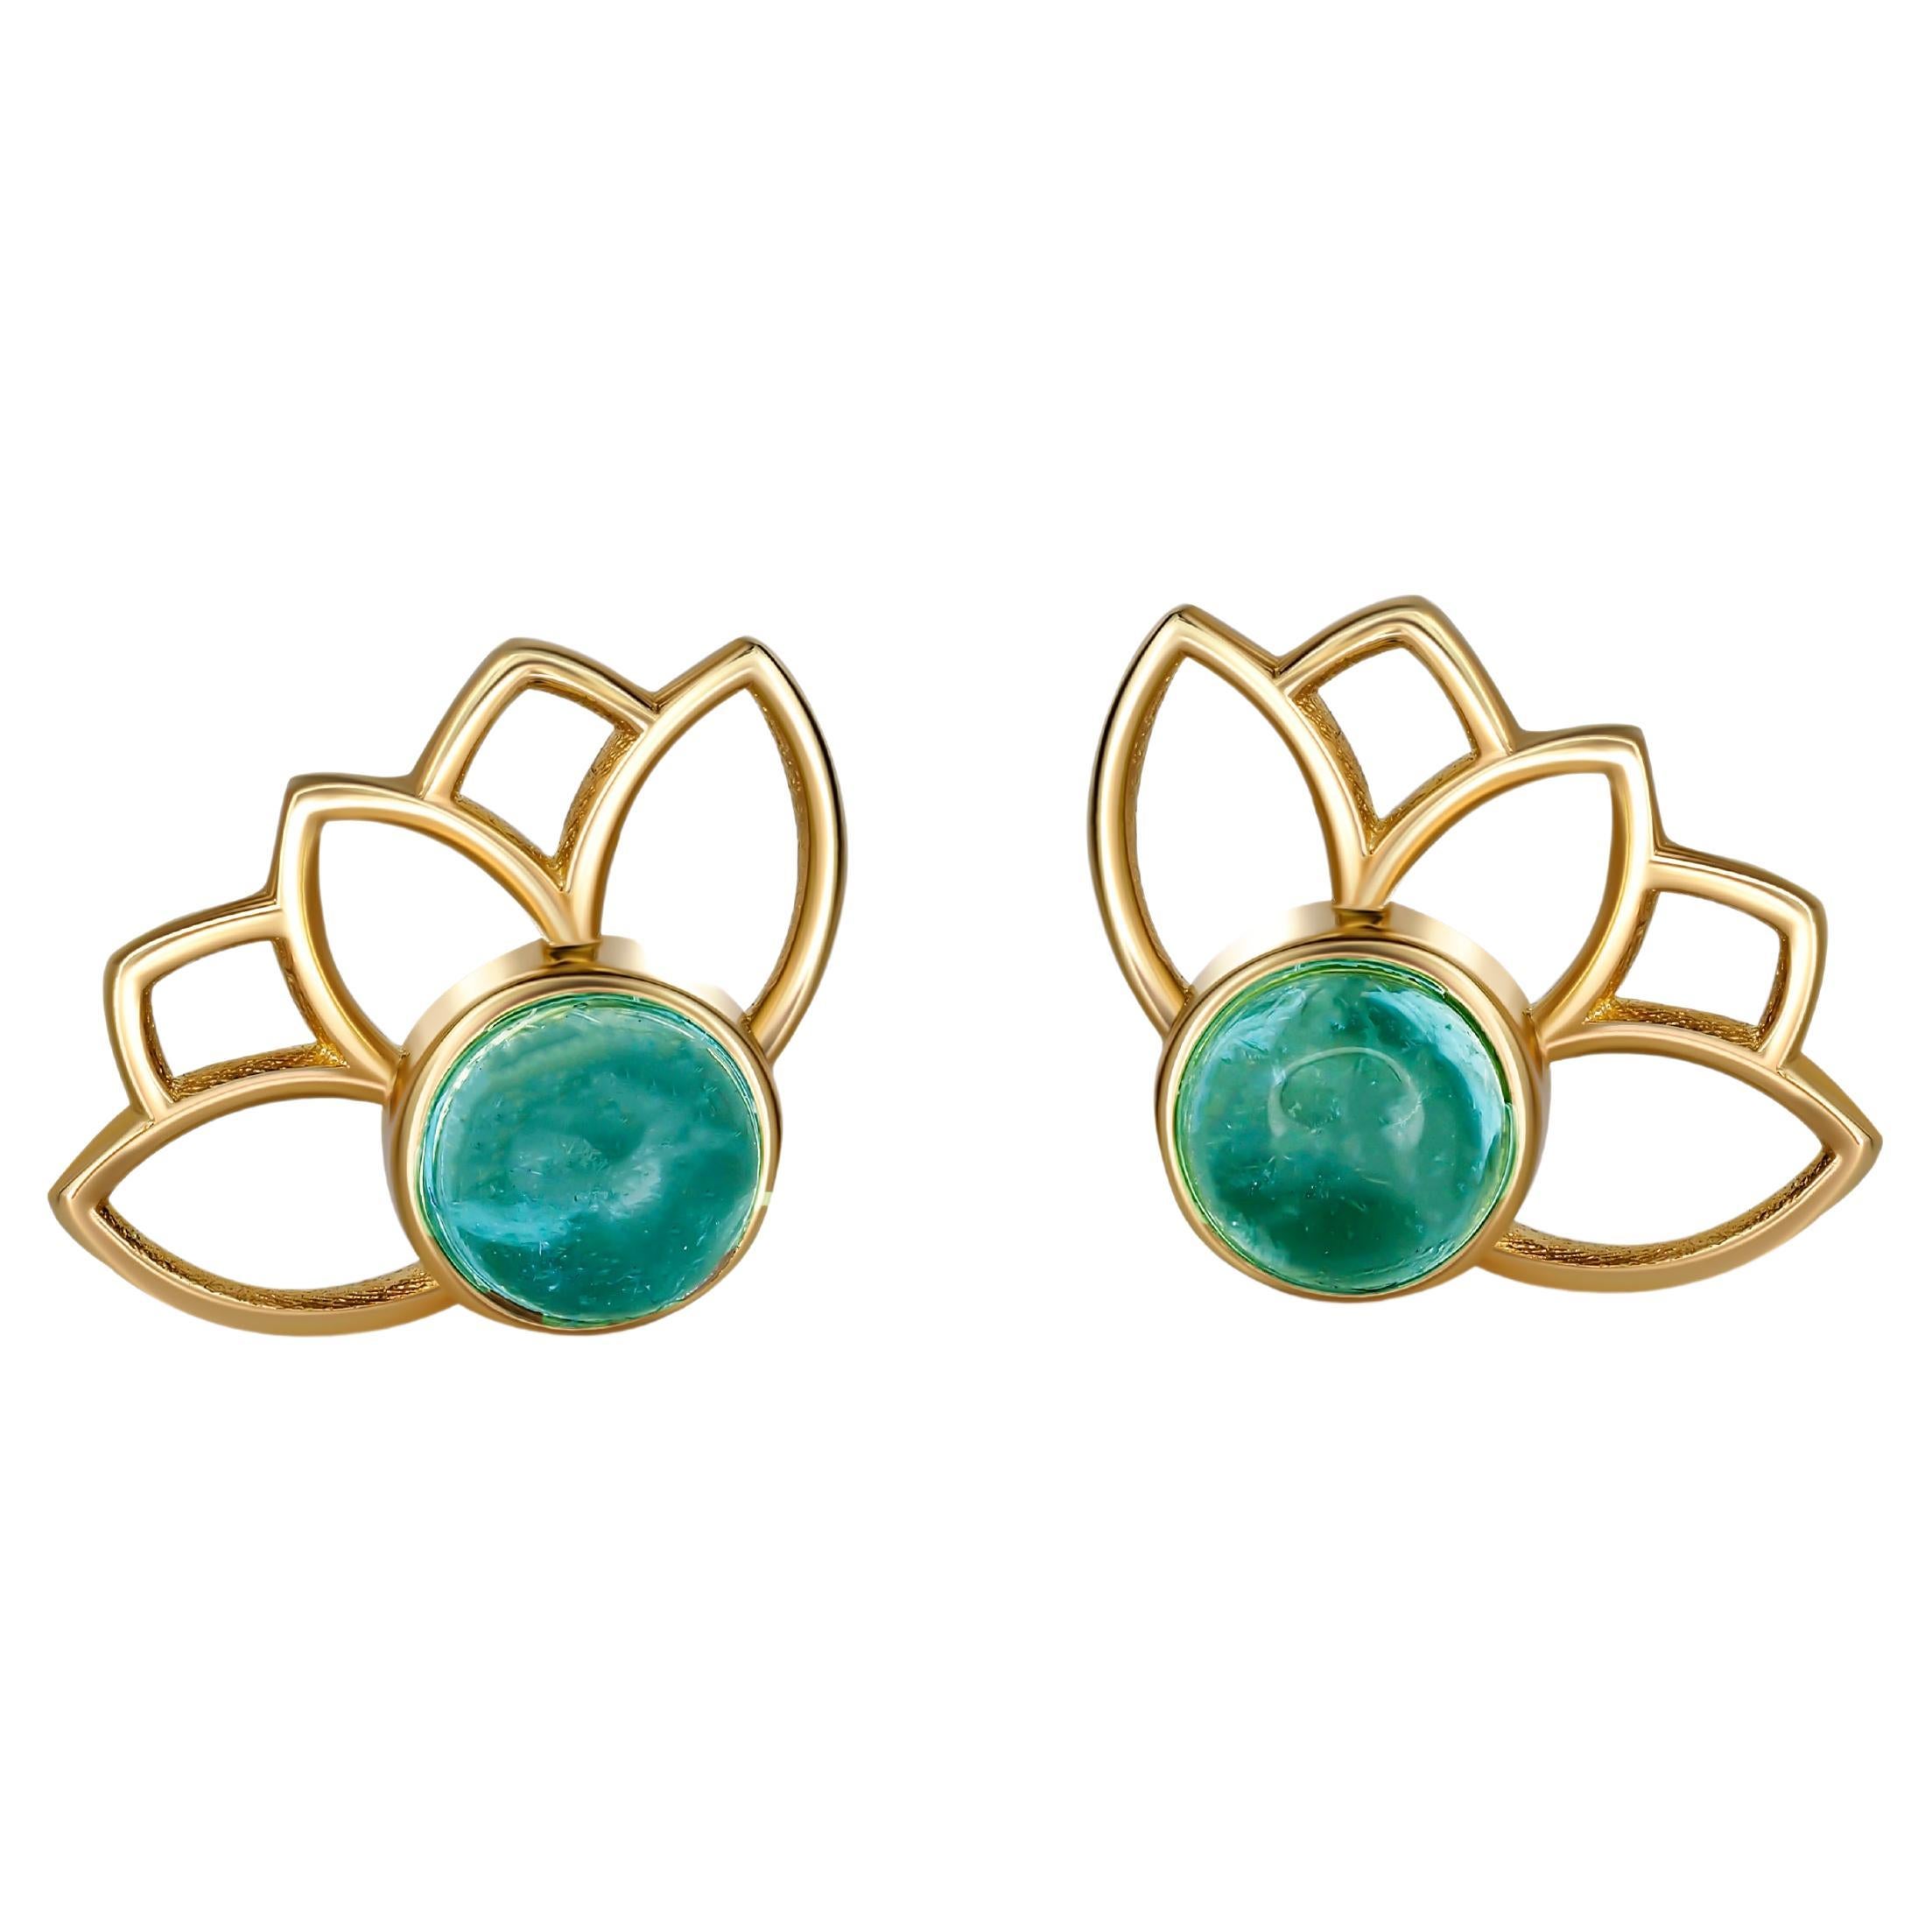 Lotus flower earrings studs in 14k gold.  For Sale